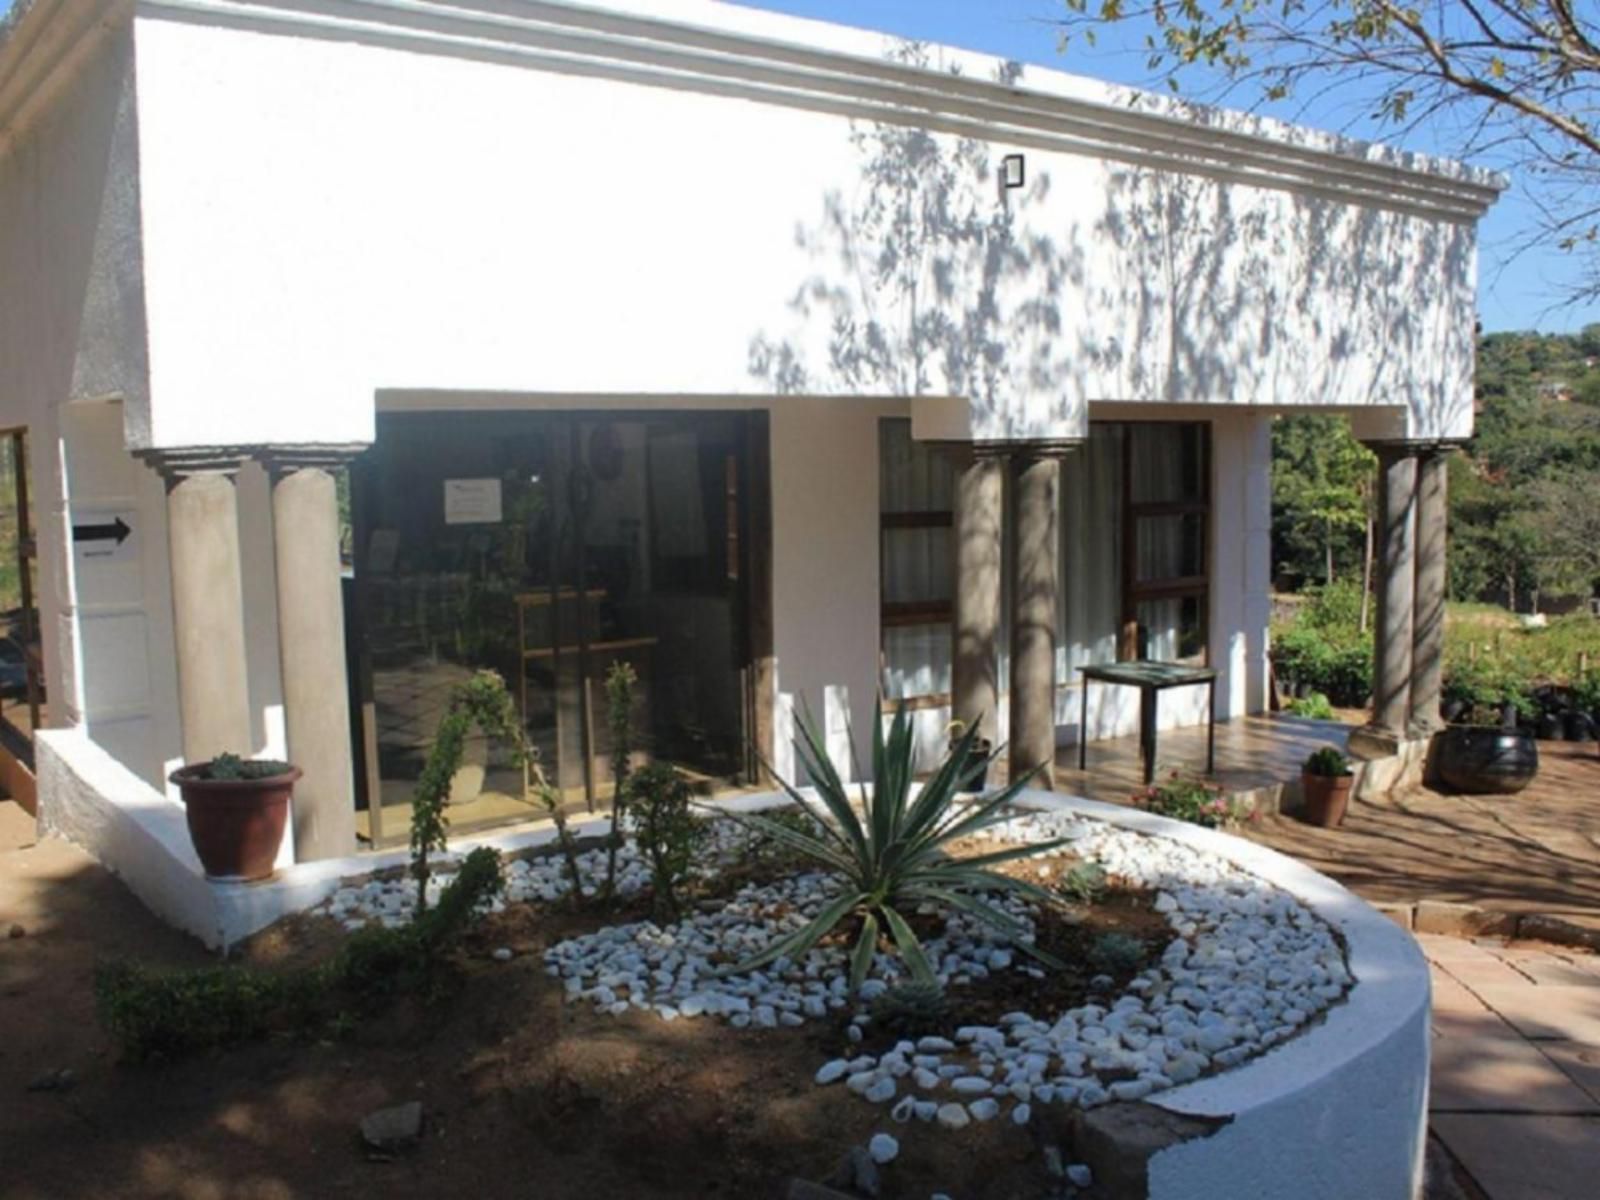 Mihandzu Guest House Hazyview Mpumalanga South Africa Garden, Nature, Plant